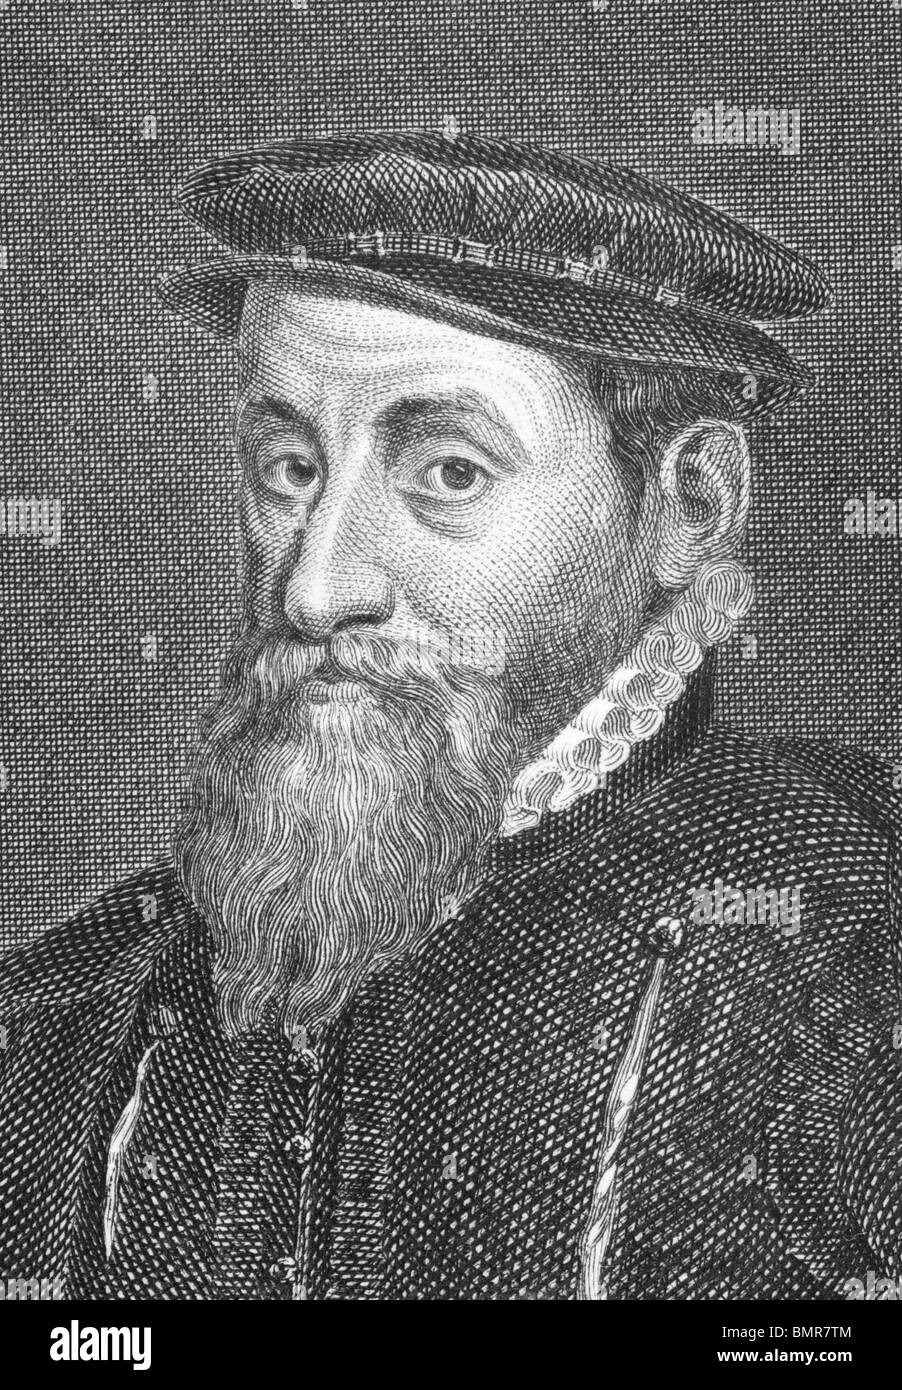 Thomas Gresham (1519-1579) on engraving from the 1800s. English merchant and financier. Stock Photo